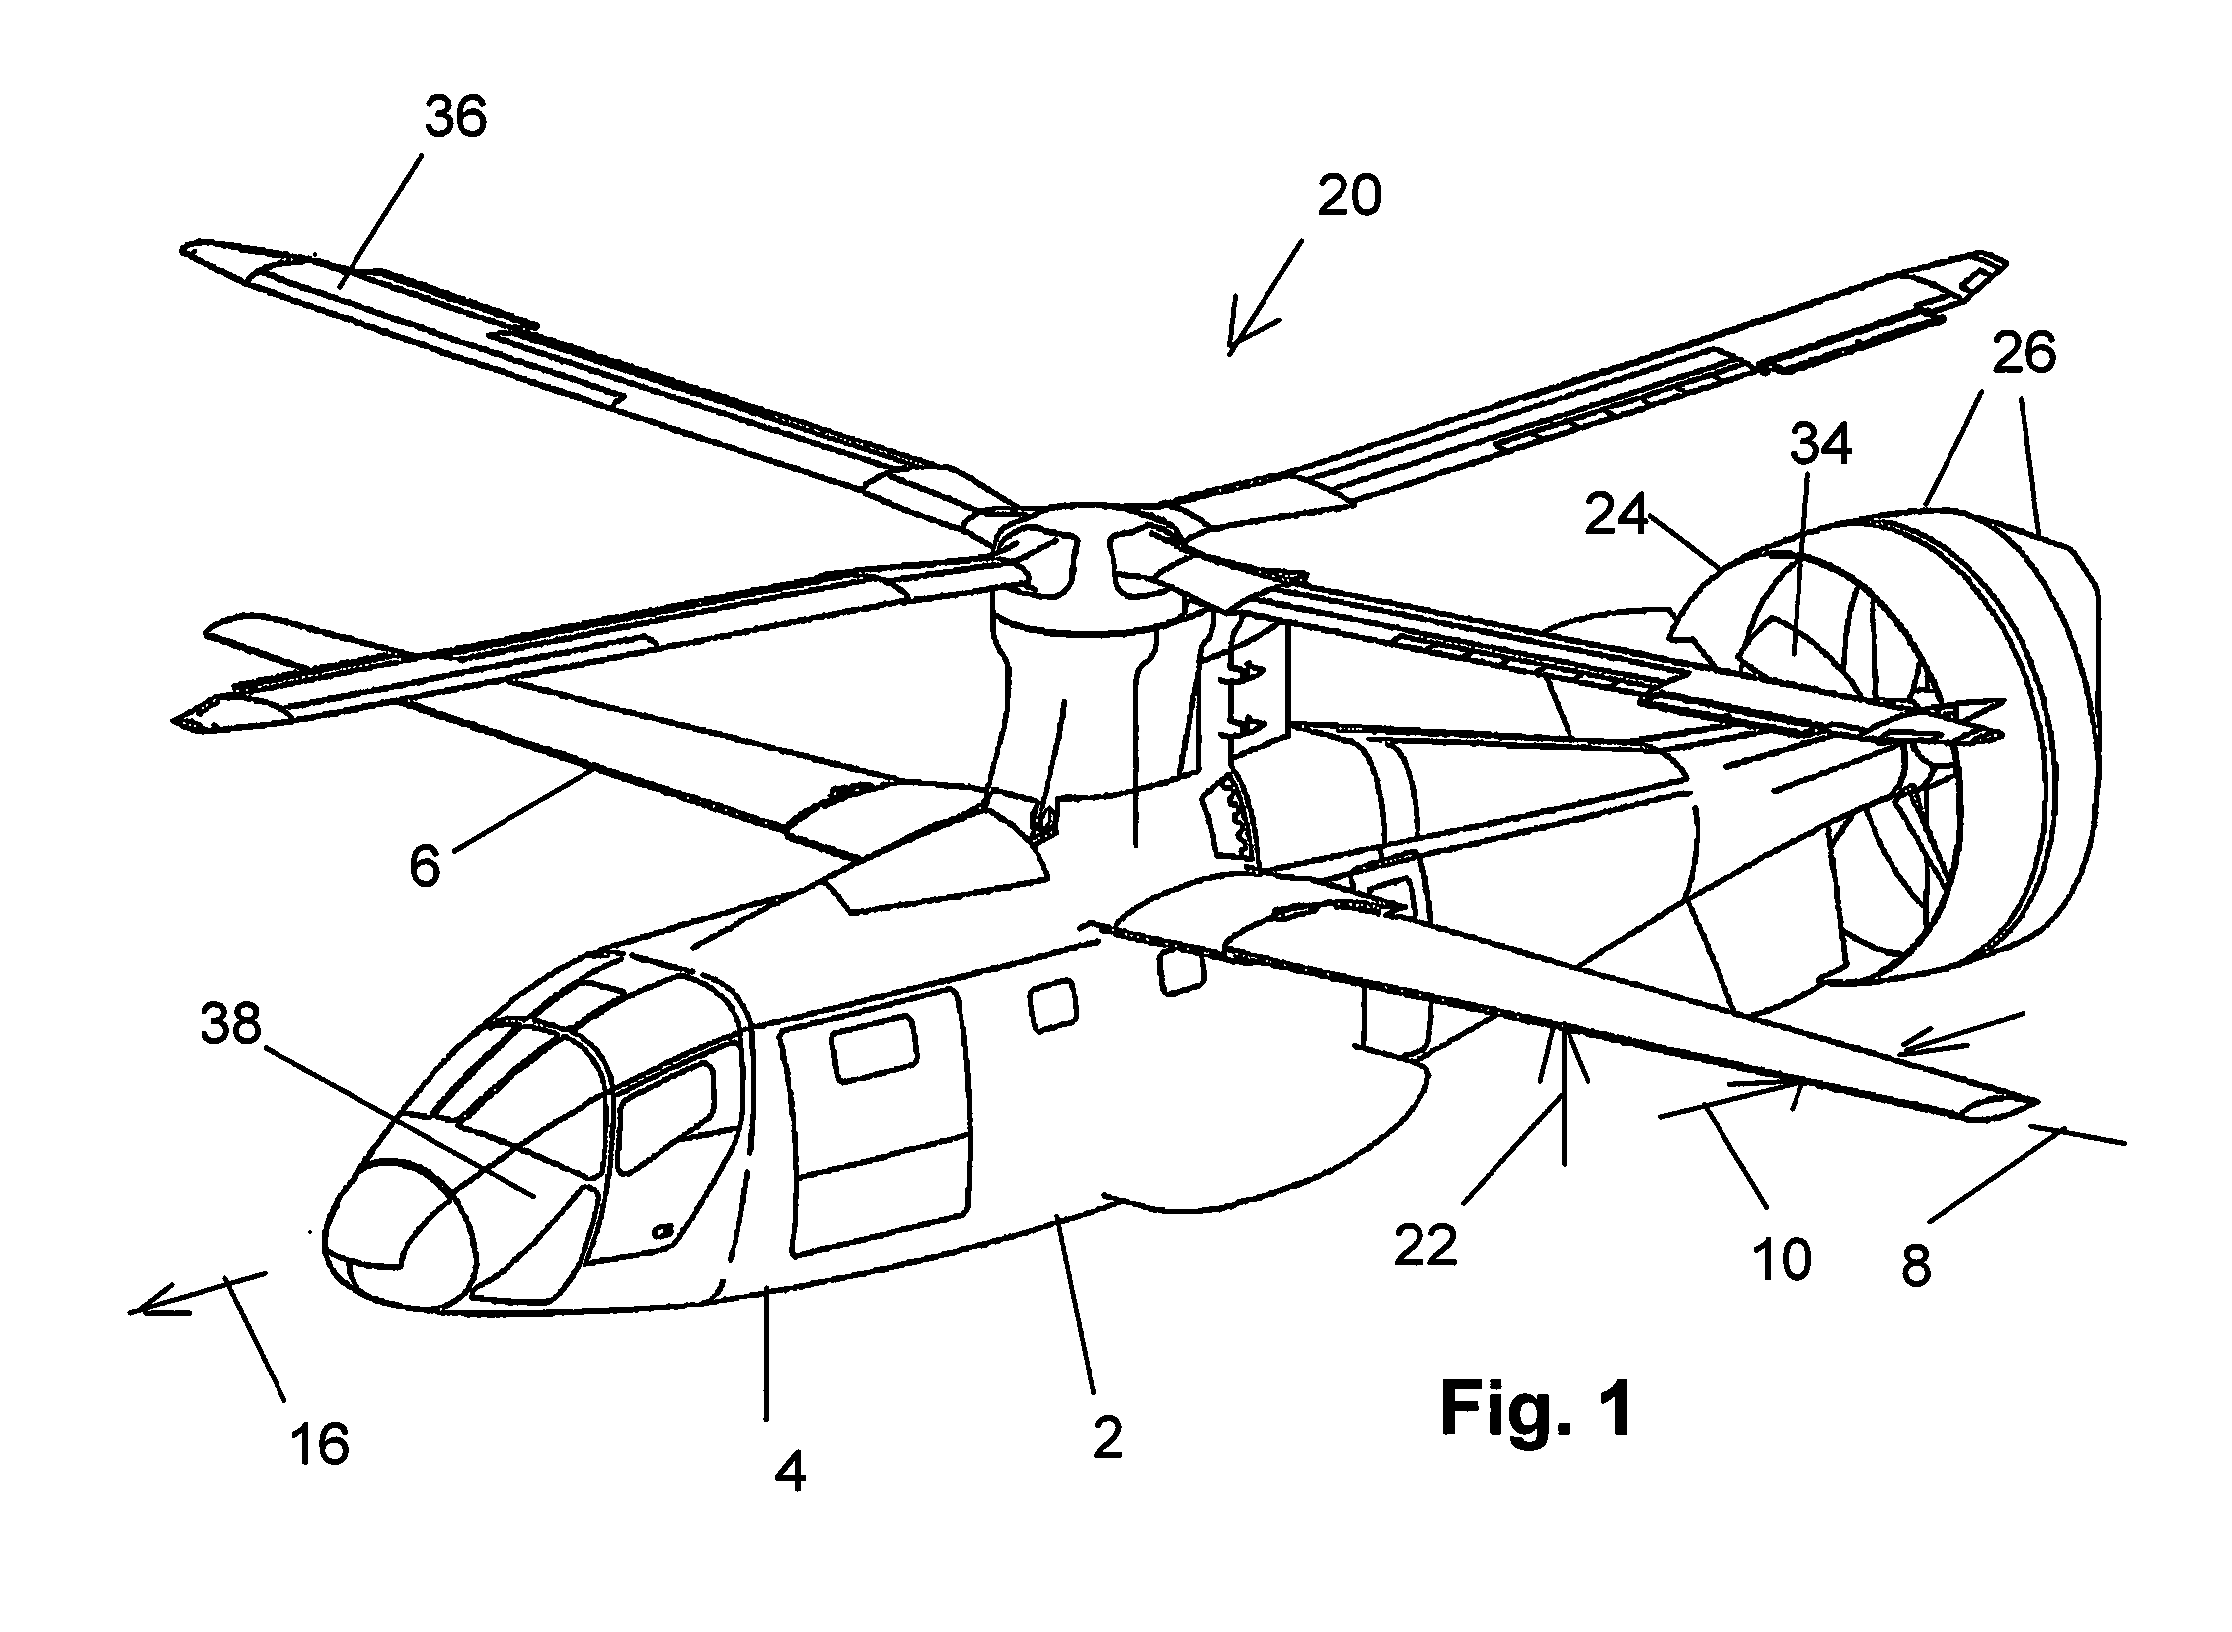 Compound Aircraft with Autorotation